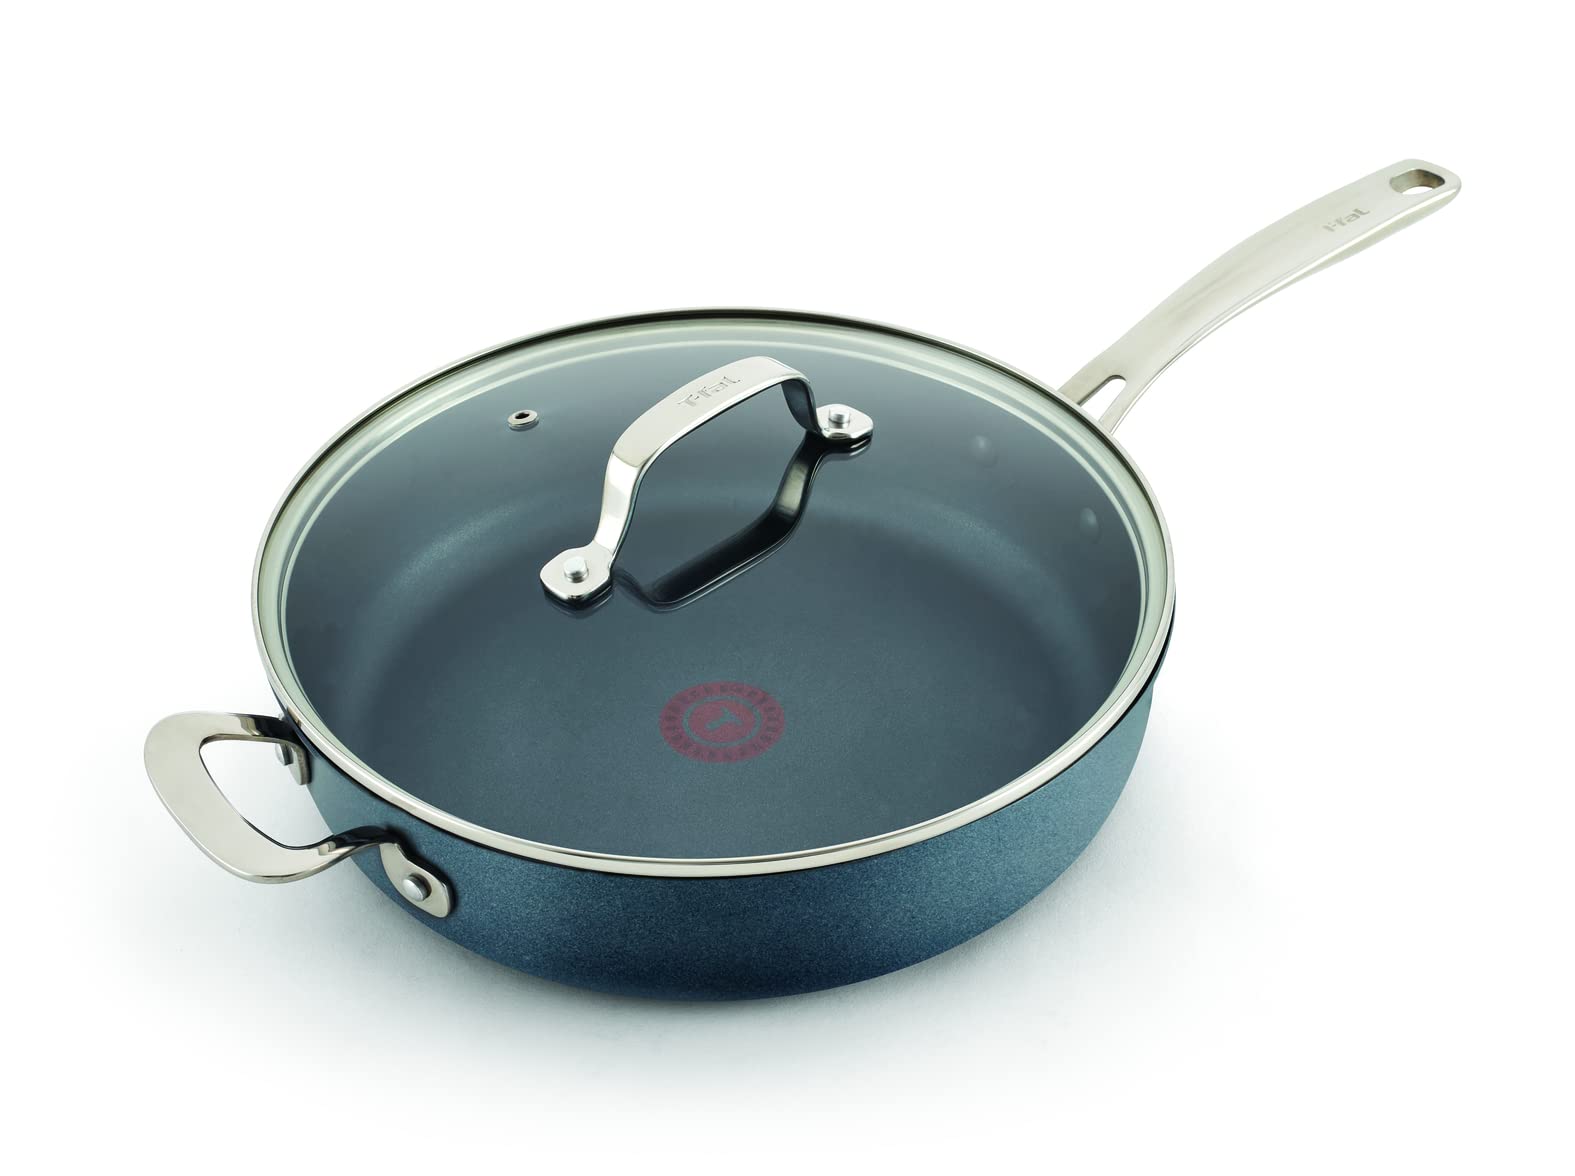 T-fal Platinum Nonstick Jumbo Cooker 5 Quart Induction Cookware, Pots and Pans, Dishwasher Safe Slate